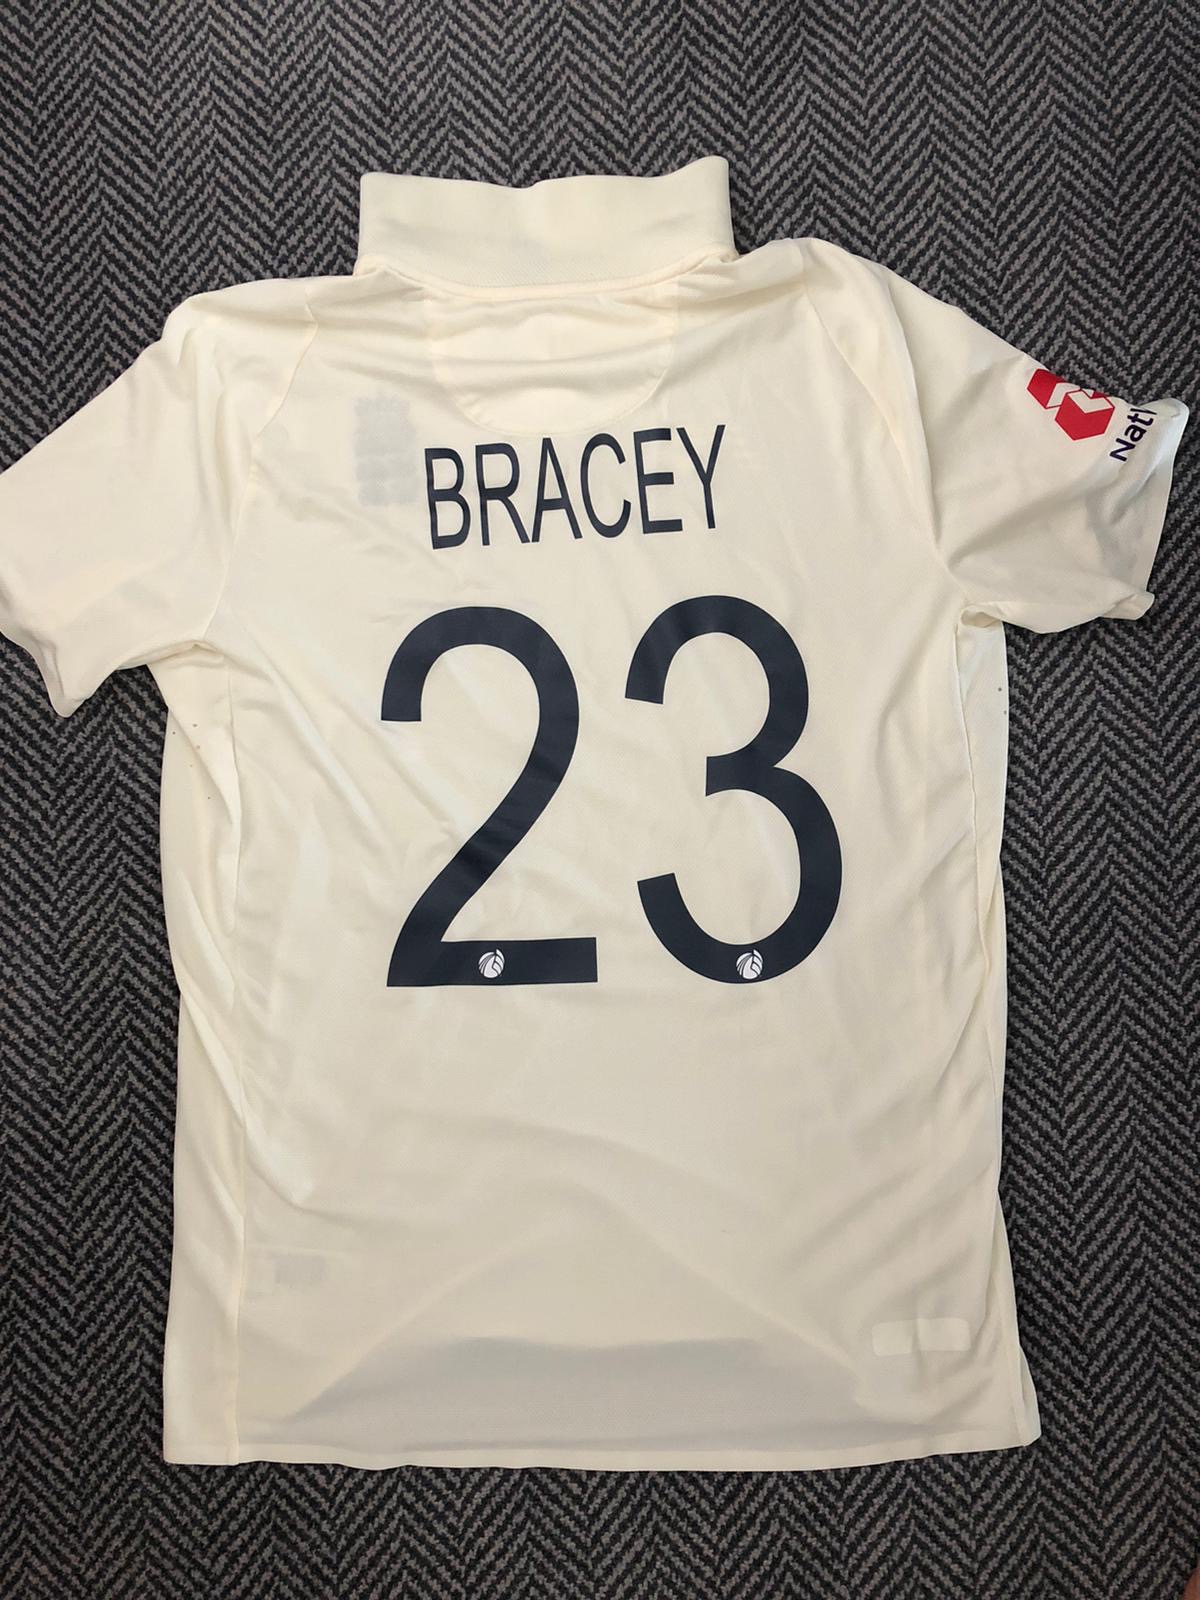 James Bracey's newly awarded England shirt.